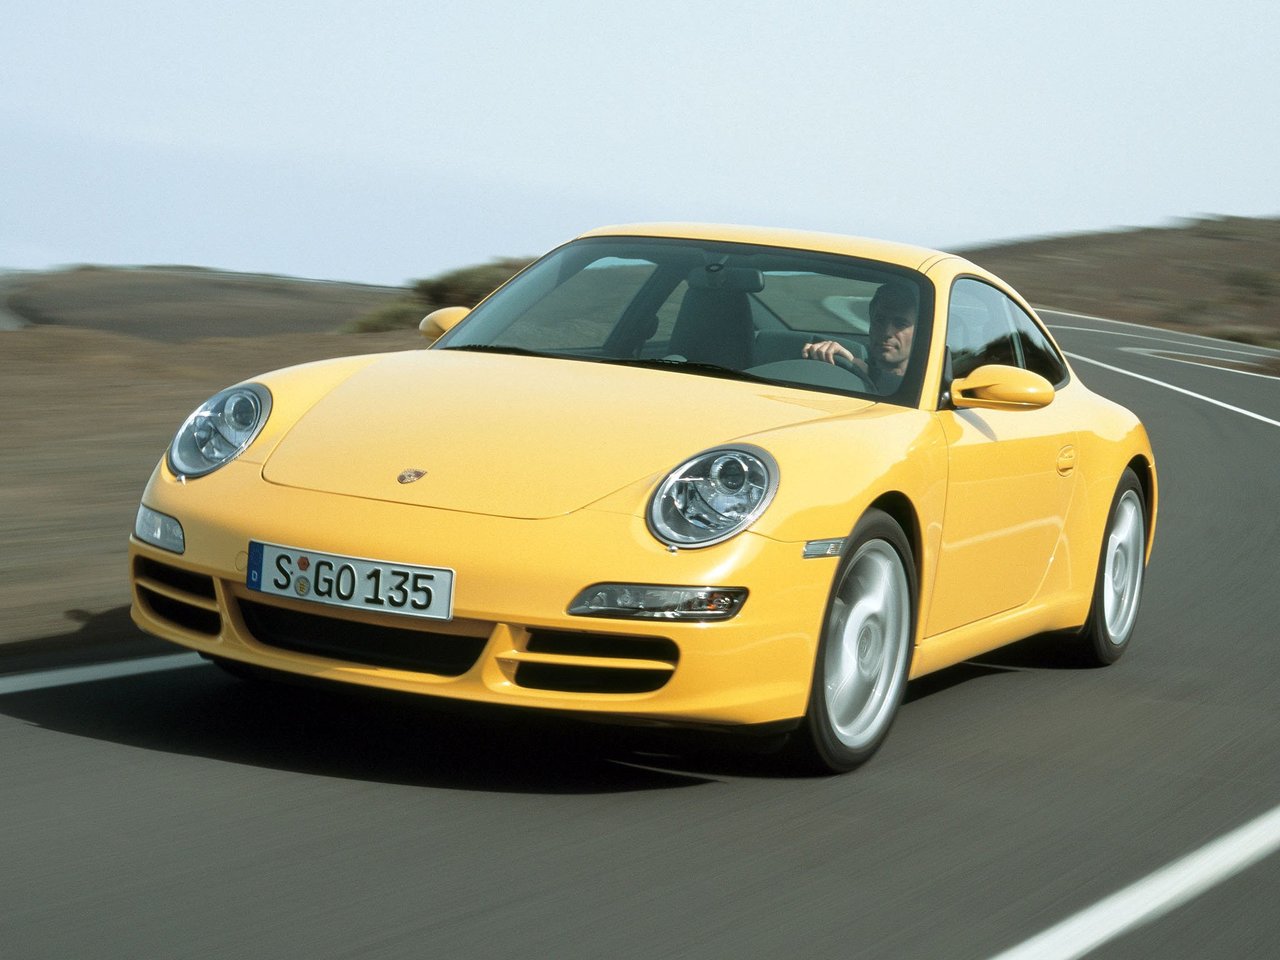 Расход газа шести комплектаций купе Porsche 911. Разница стоимости заправки газом и бензином. Автономный пробег до и после установки ГБО.